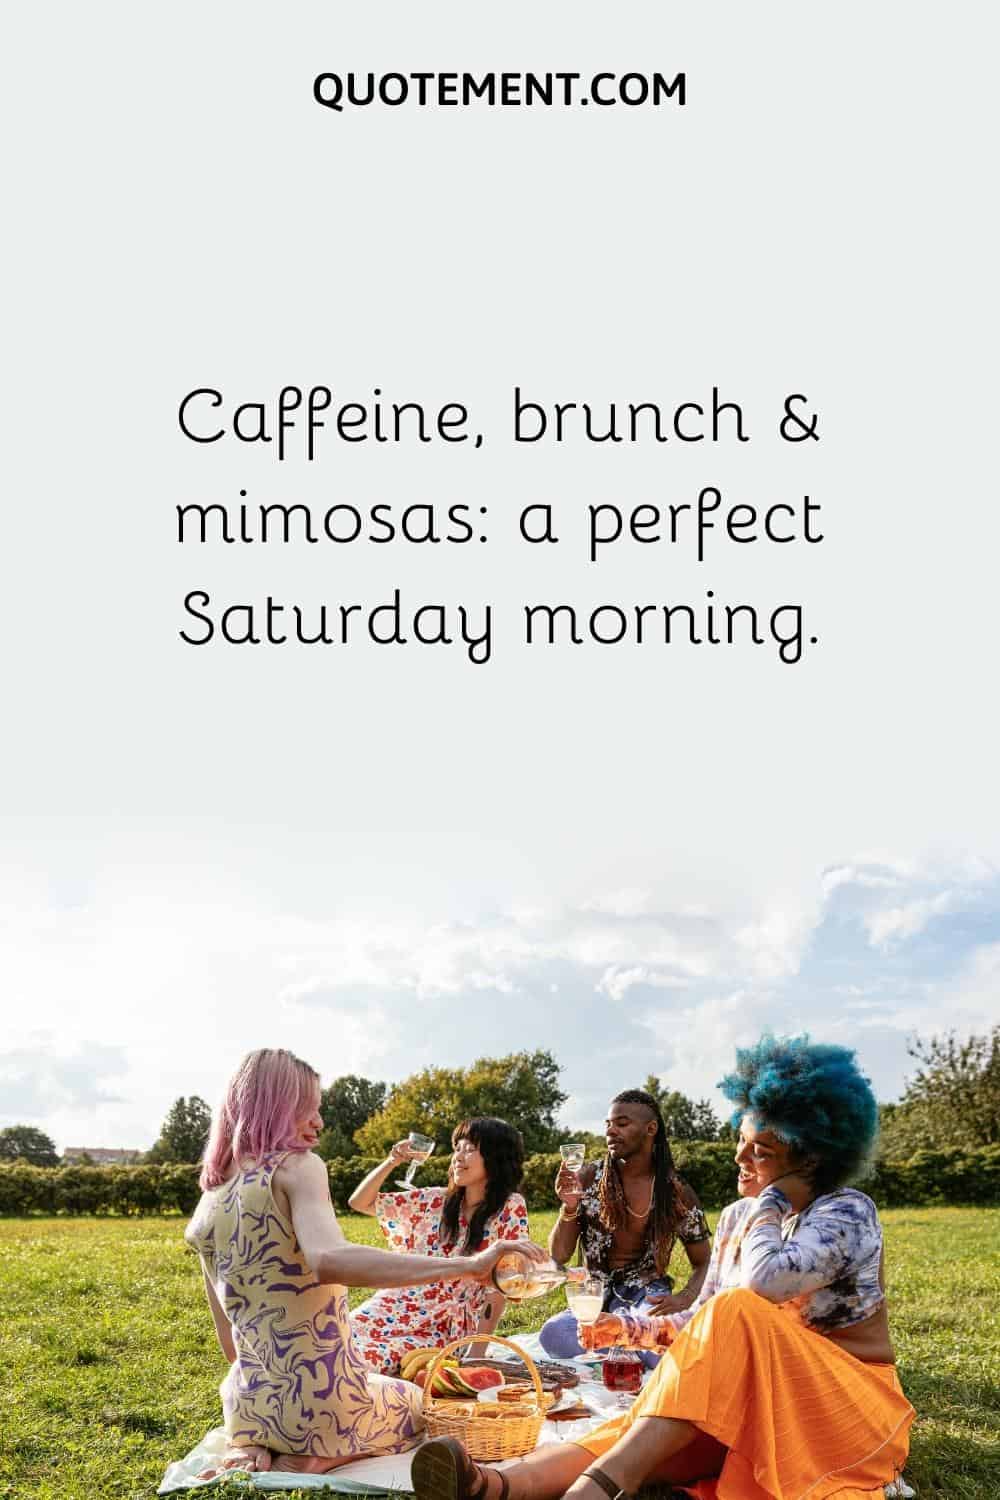 Caffeine, brunch & mimosas a perfect Saturday morning.